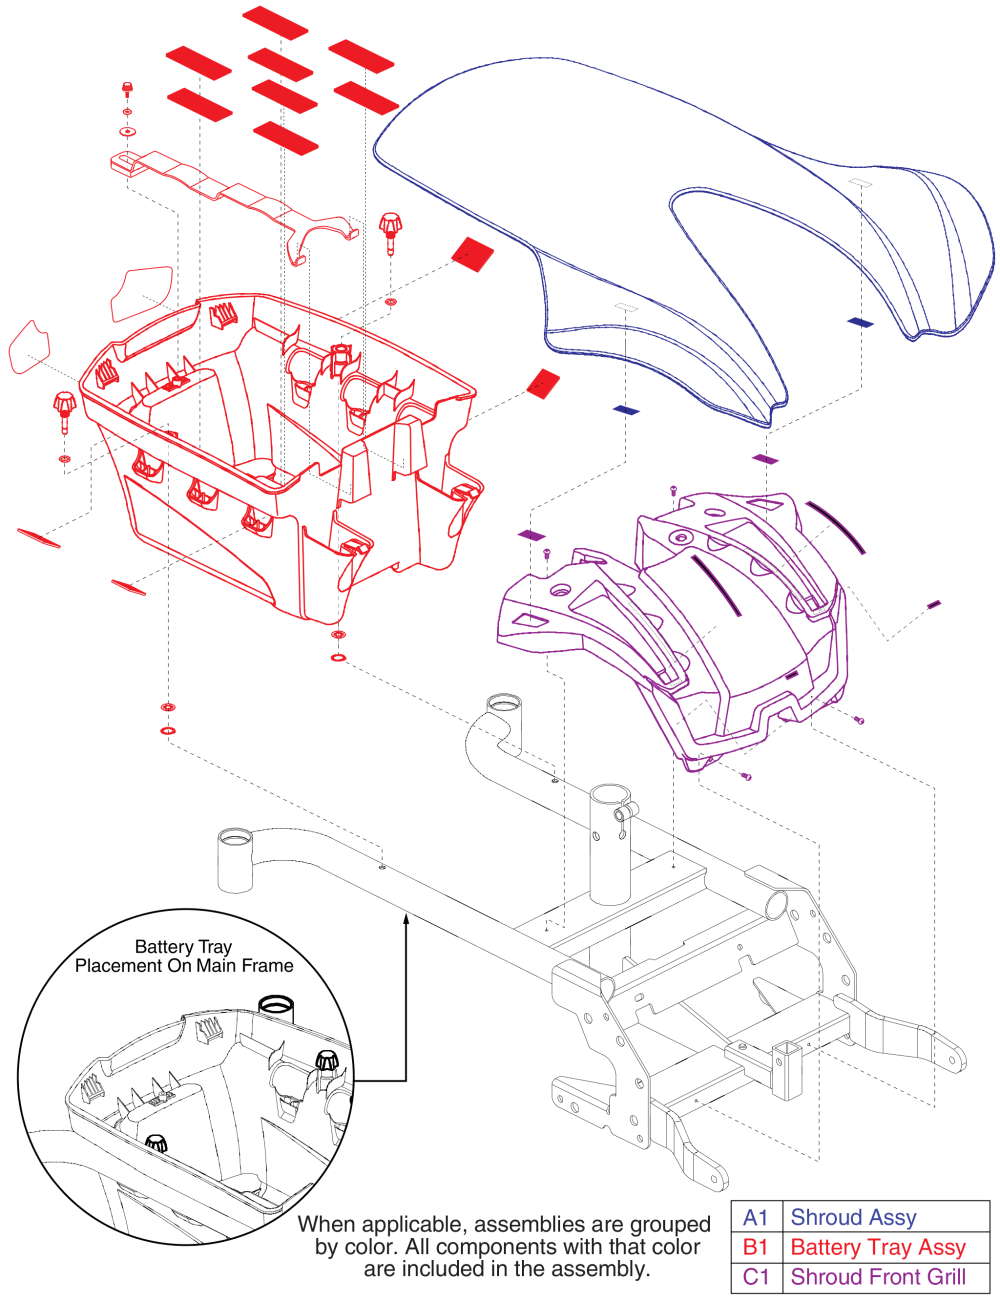 Shroud Assy parts diagram